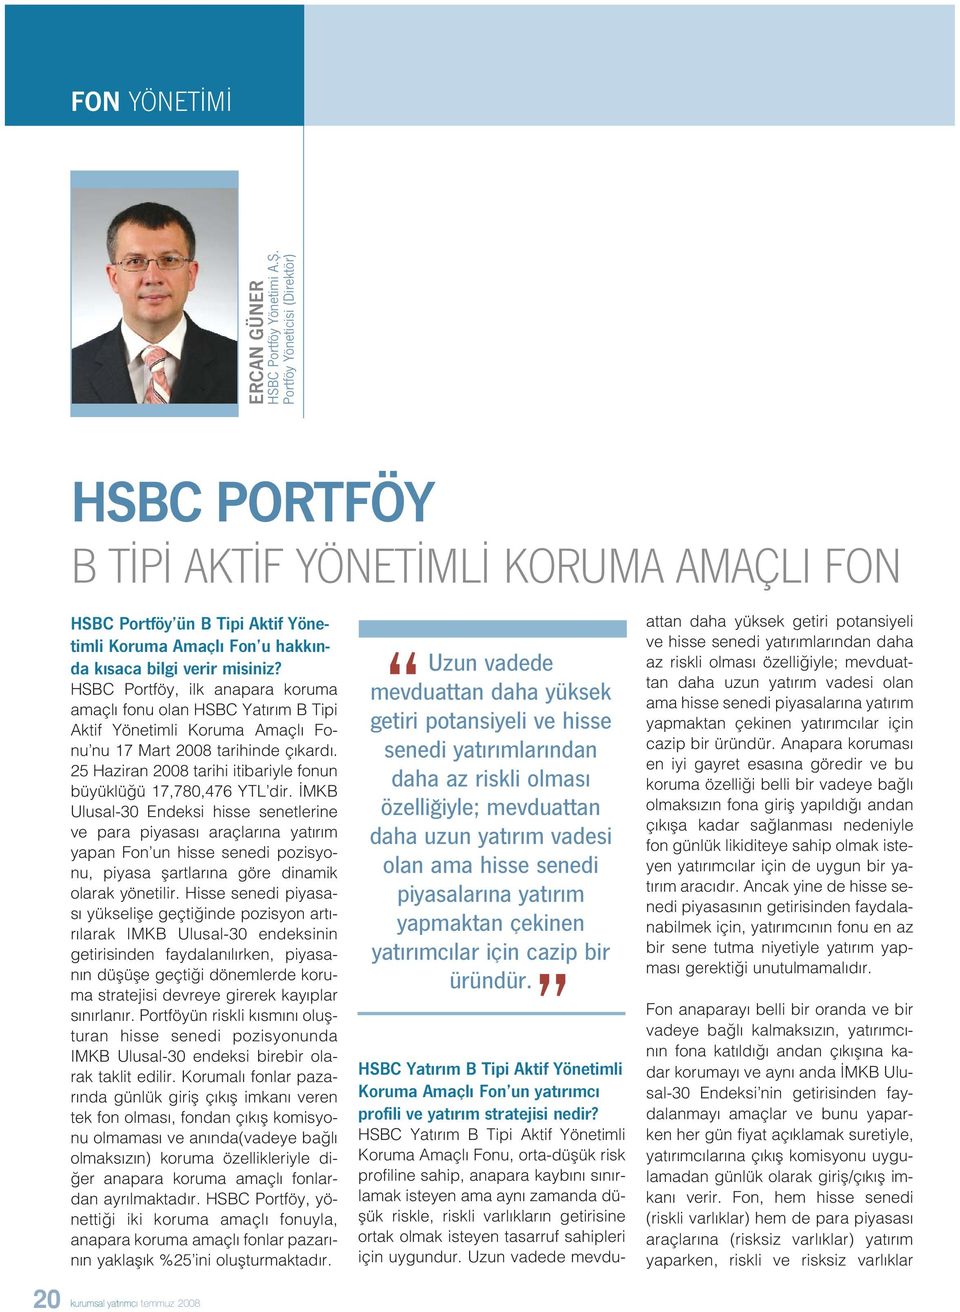 HSBC Portföy, ilk anapara koruma amaçl fonu olan HSBC Yat r m B Tipi Aktif Yönetimli Koruma Amaçl Fonu nu 17 Mart 2008 tarihinde ç kard.